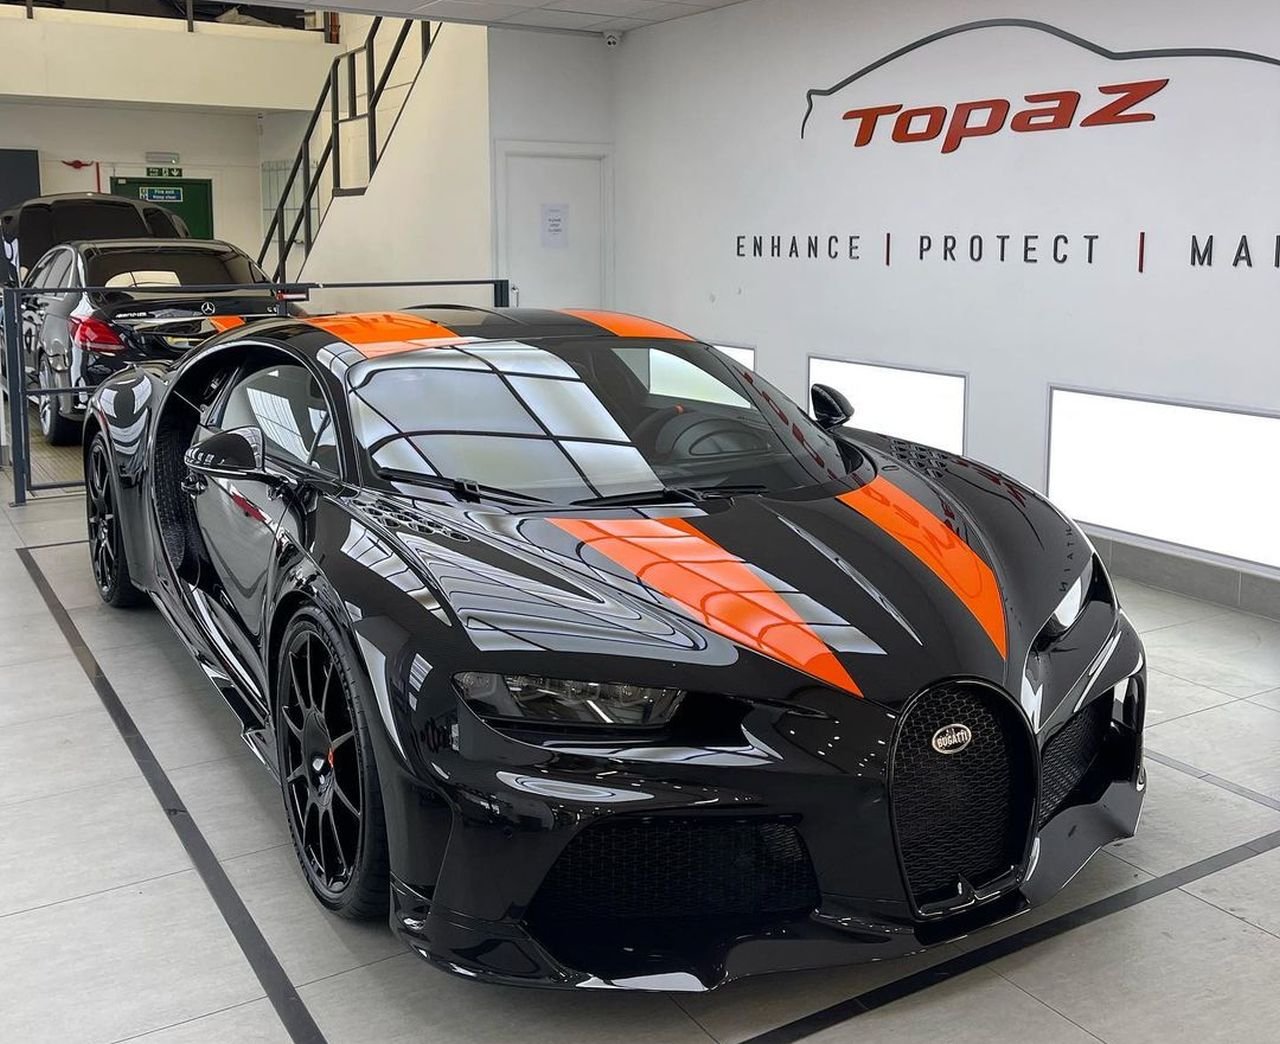 Bugatti Chiron Super Sport 300+ arrives at Topaz Detailing - The Supercar  Blog